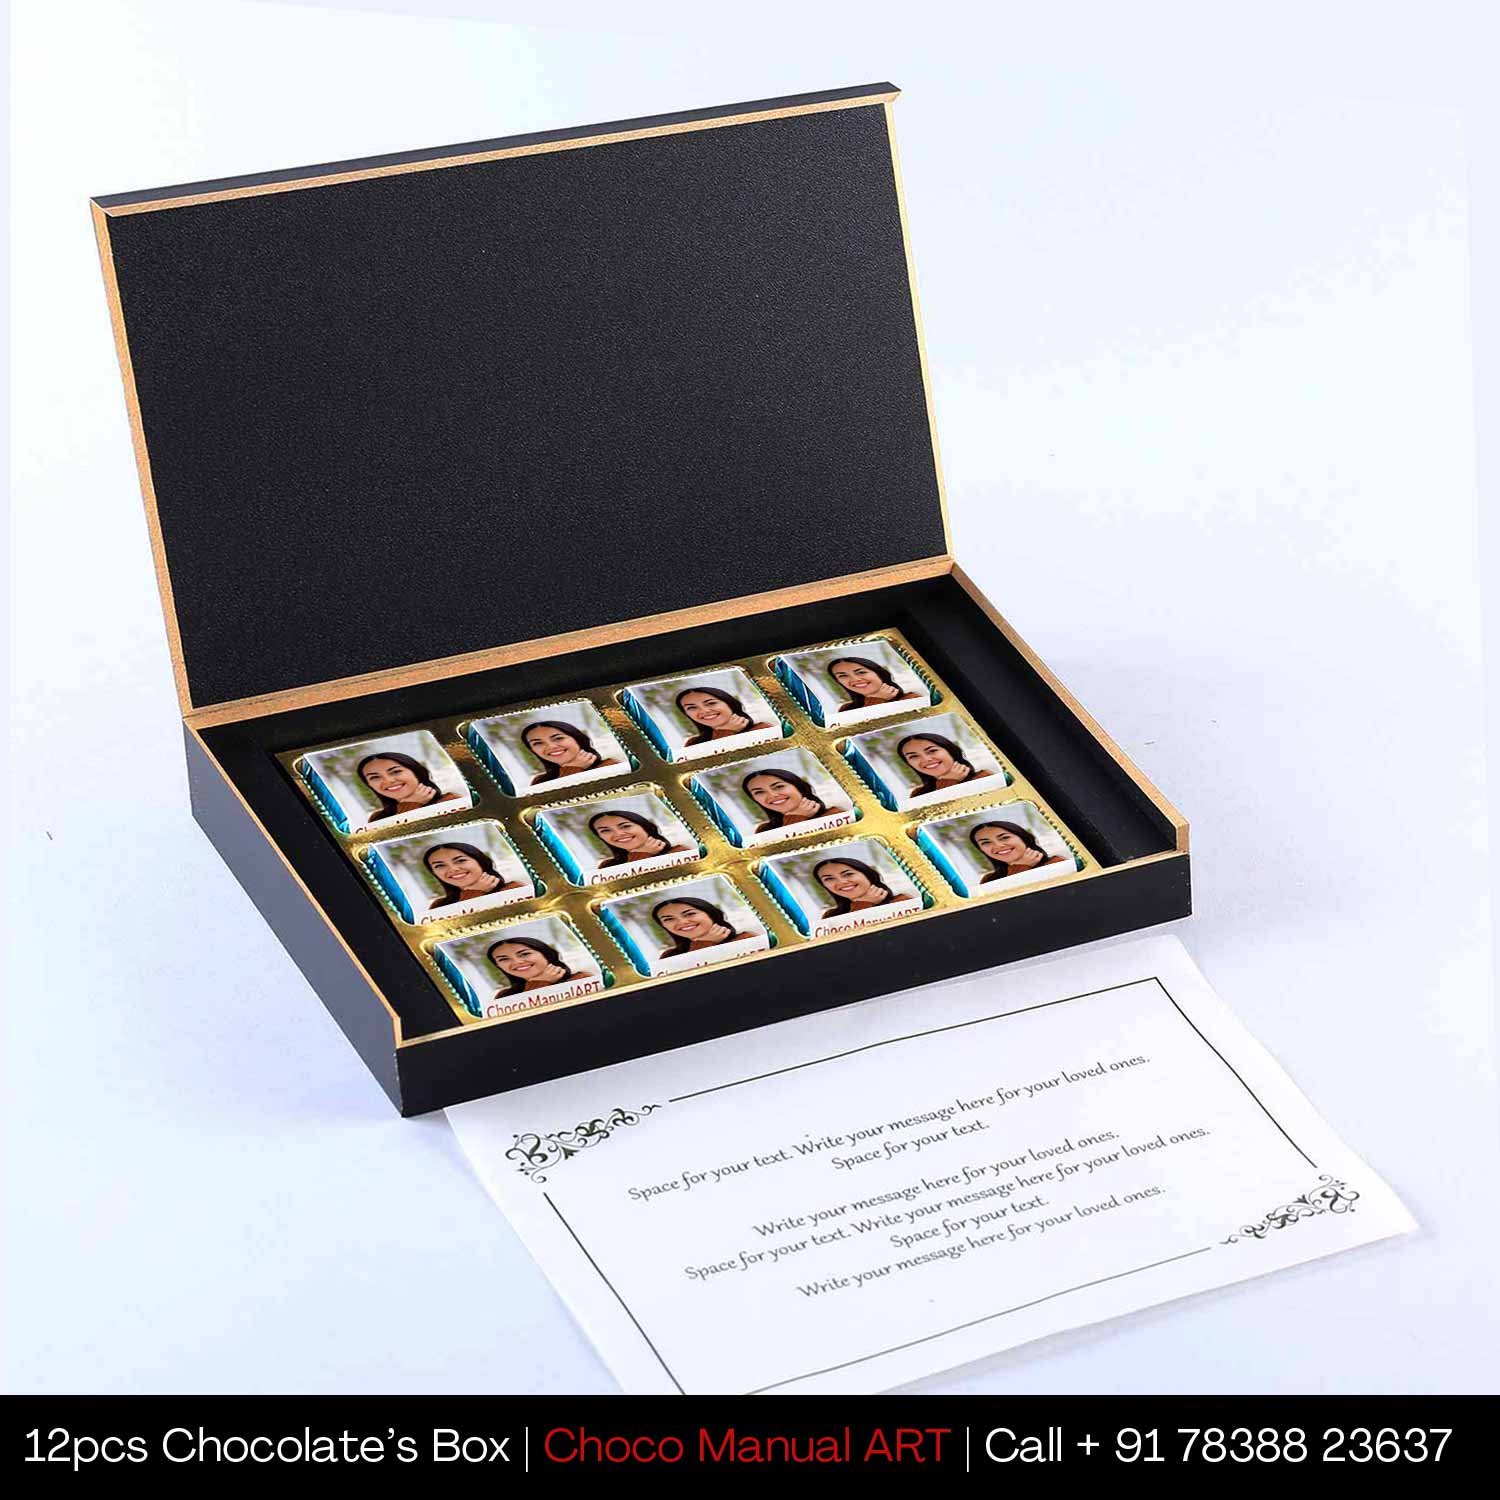 Chocolate Box for Thank You I  Delicious chocolates I  Photo/Name printed chocolate box I  Elegant wooden packaging I  Free shipping across India